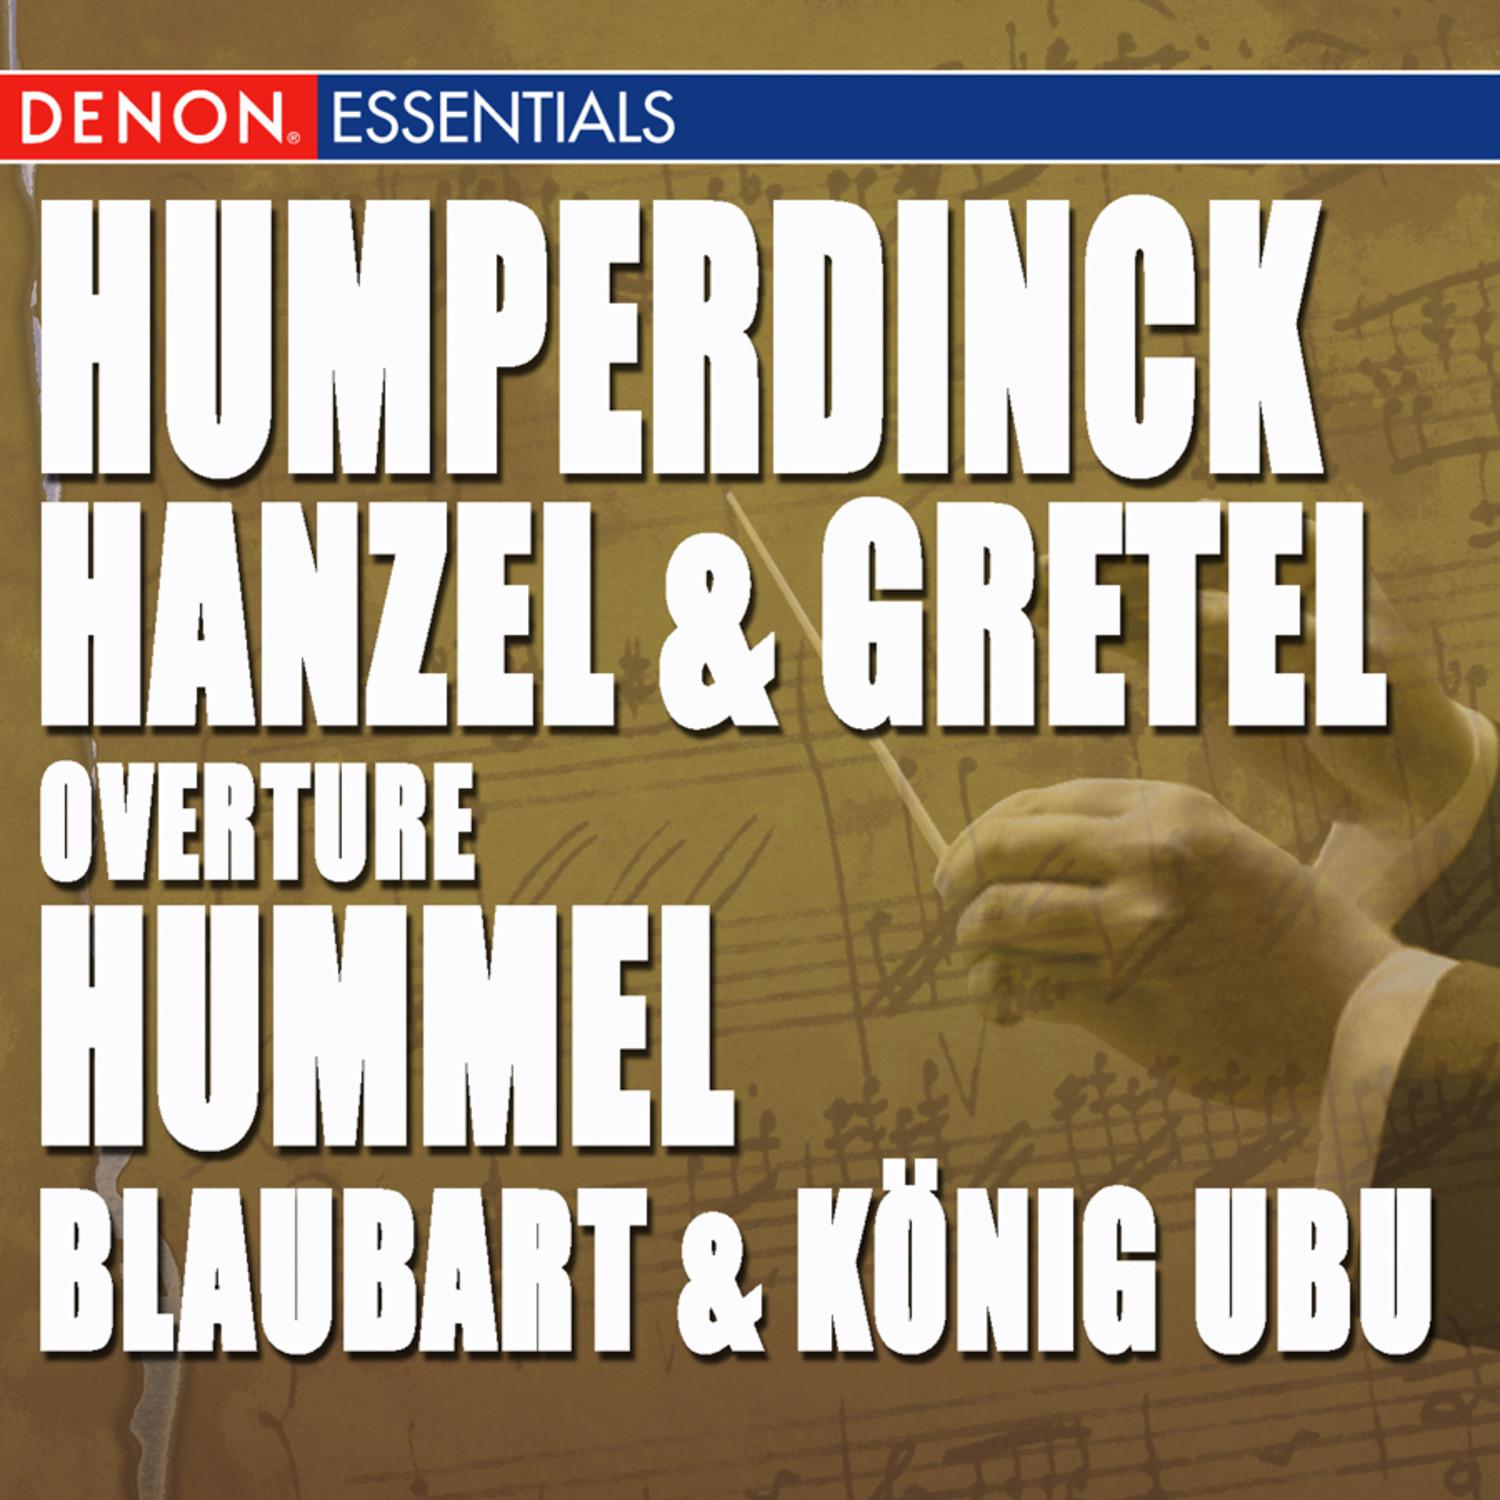 Humperdinck: Hanzel & Gretel Highlights - Hummel: Blaubart & Konig Ubu